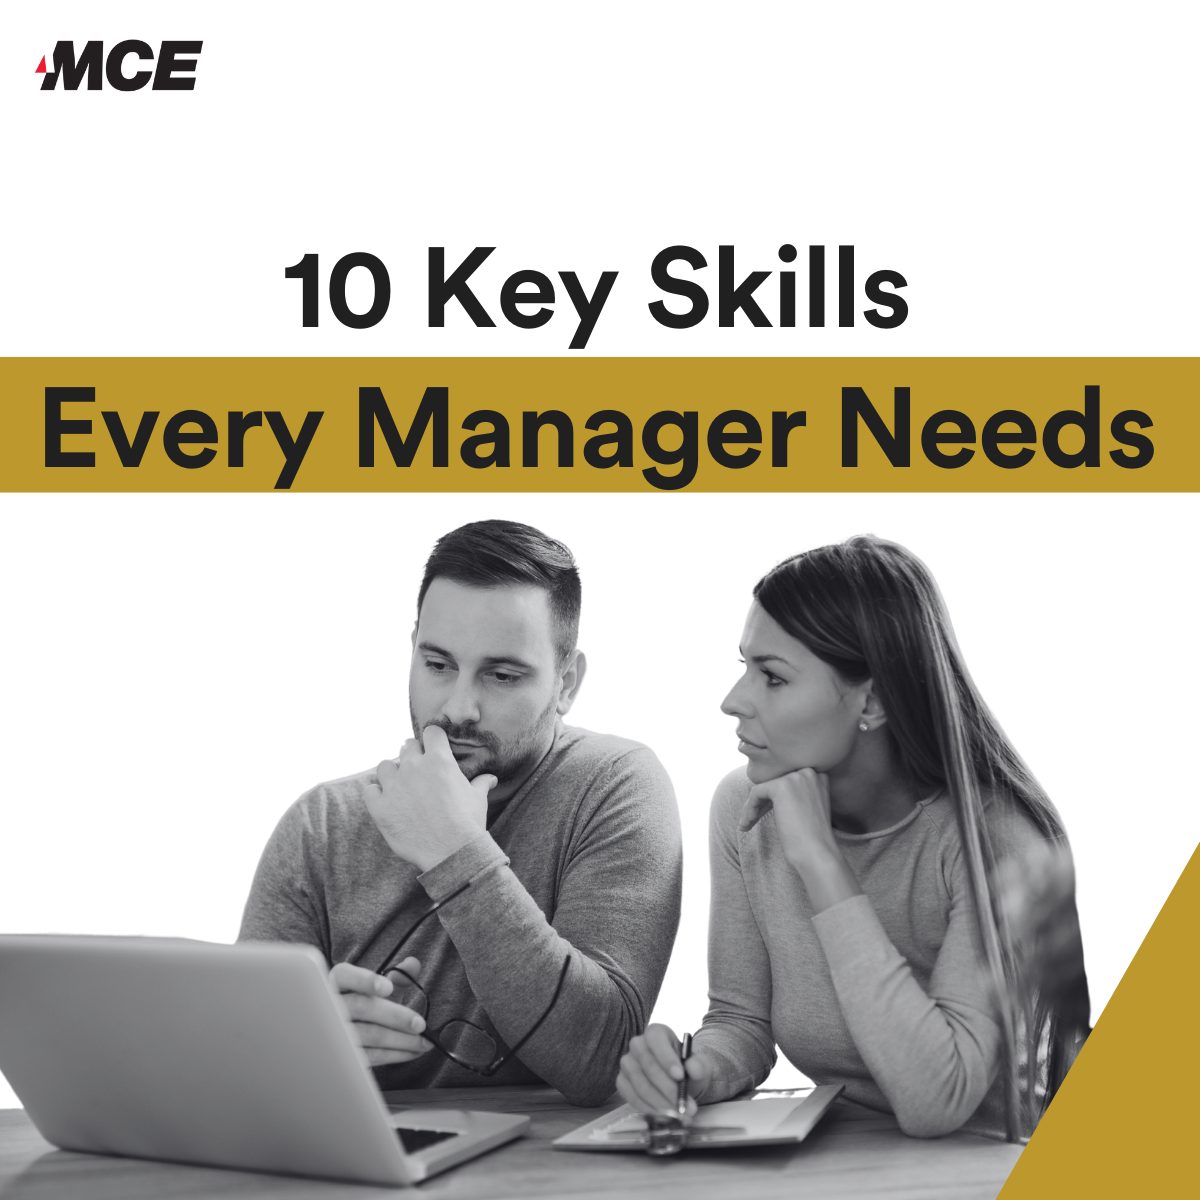 10 Key Skills Every Manager Needs